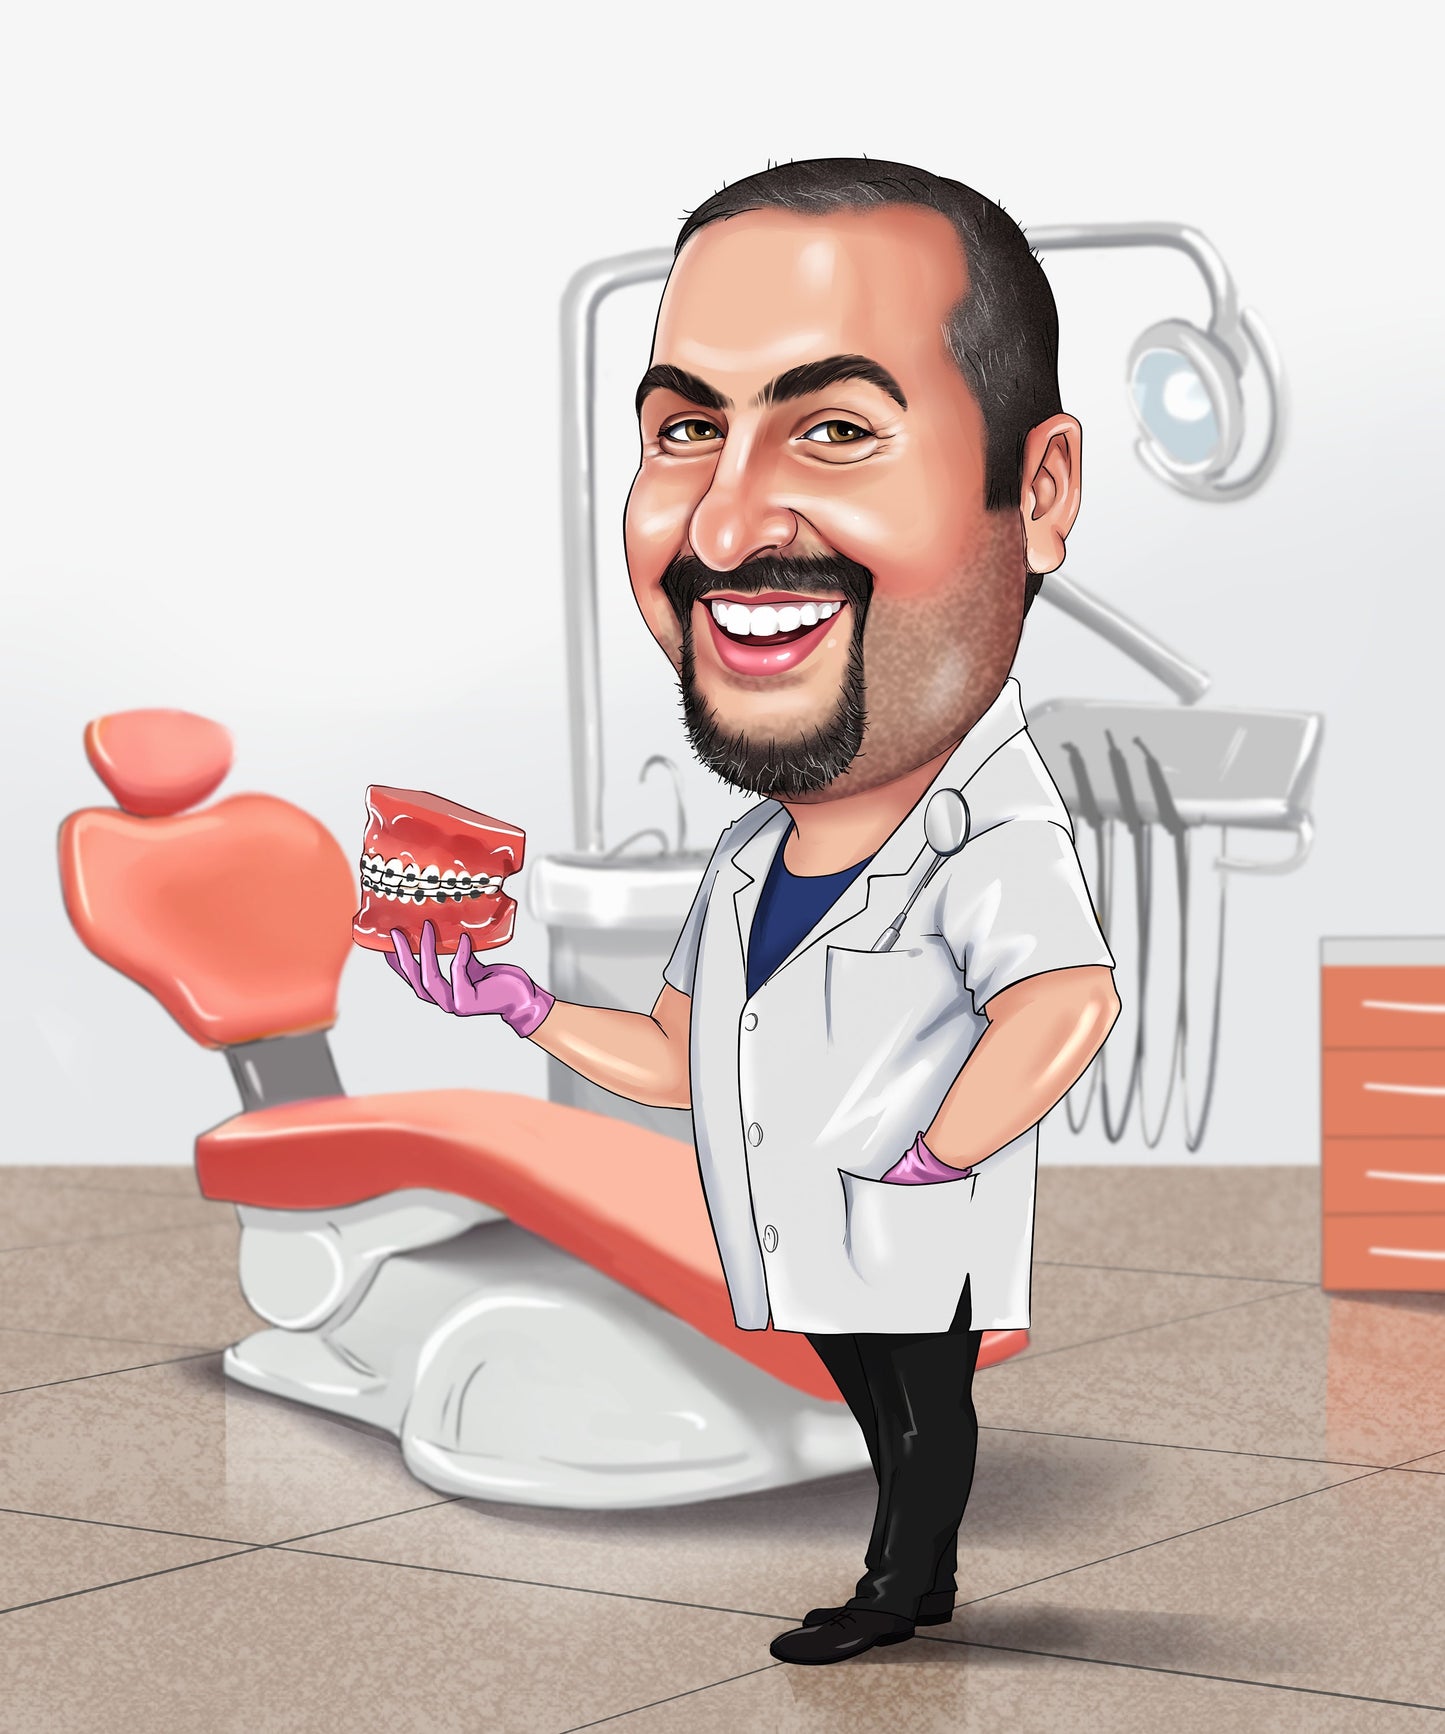 Dentist Gift Portrait - Custom Caricature From Photo, Dentist art, dentist retirement